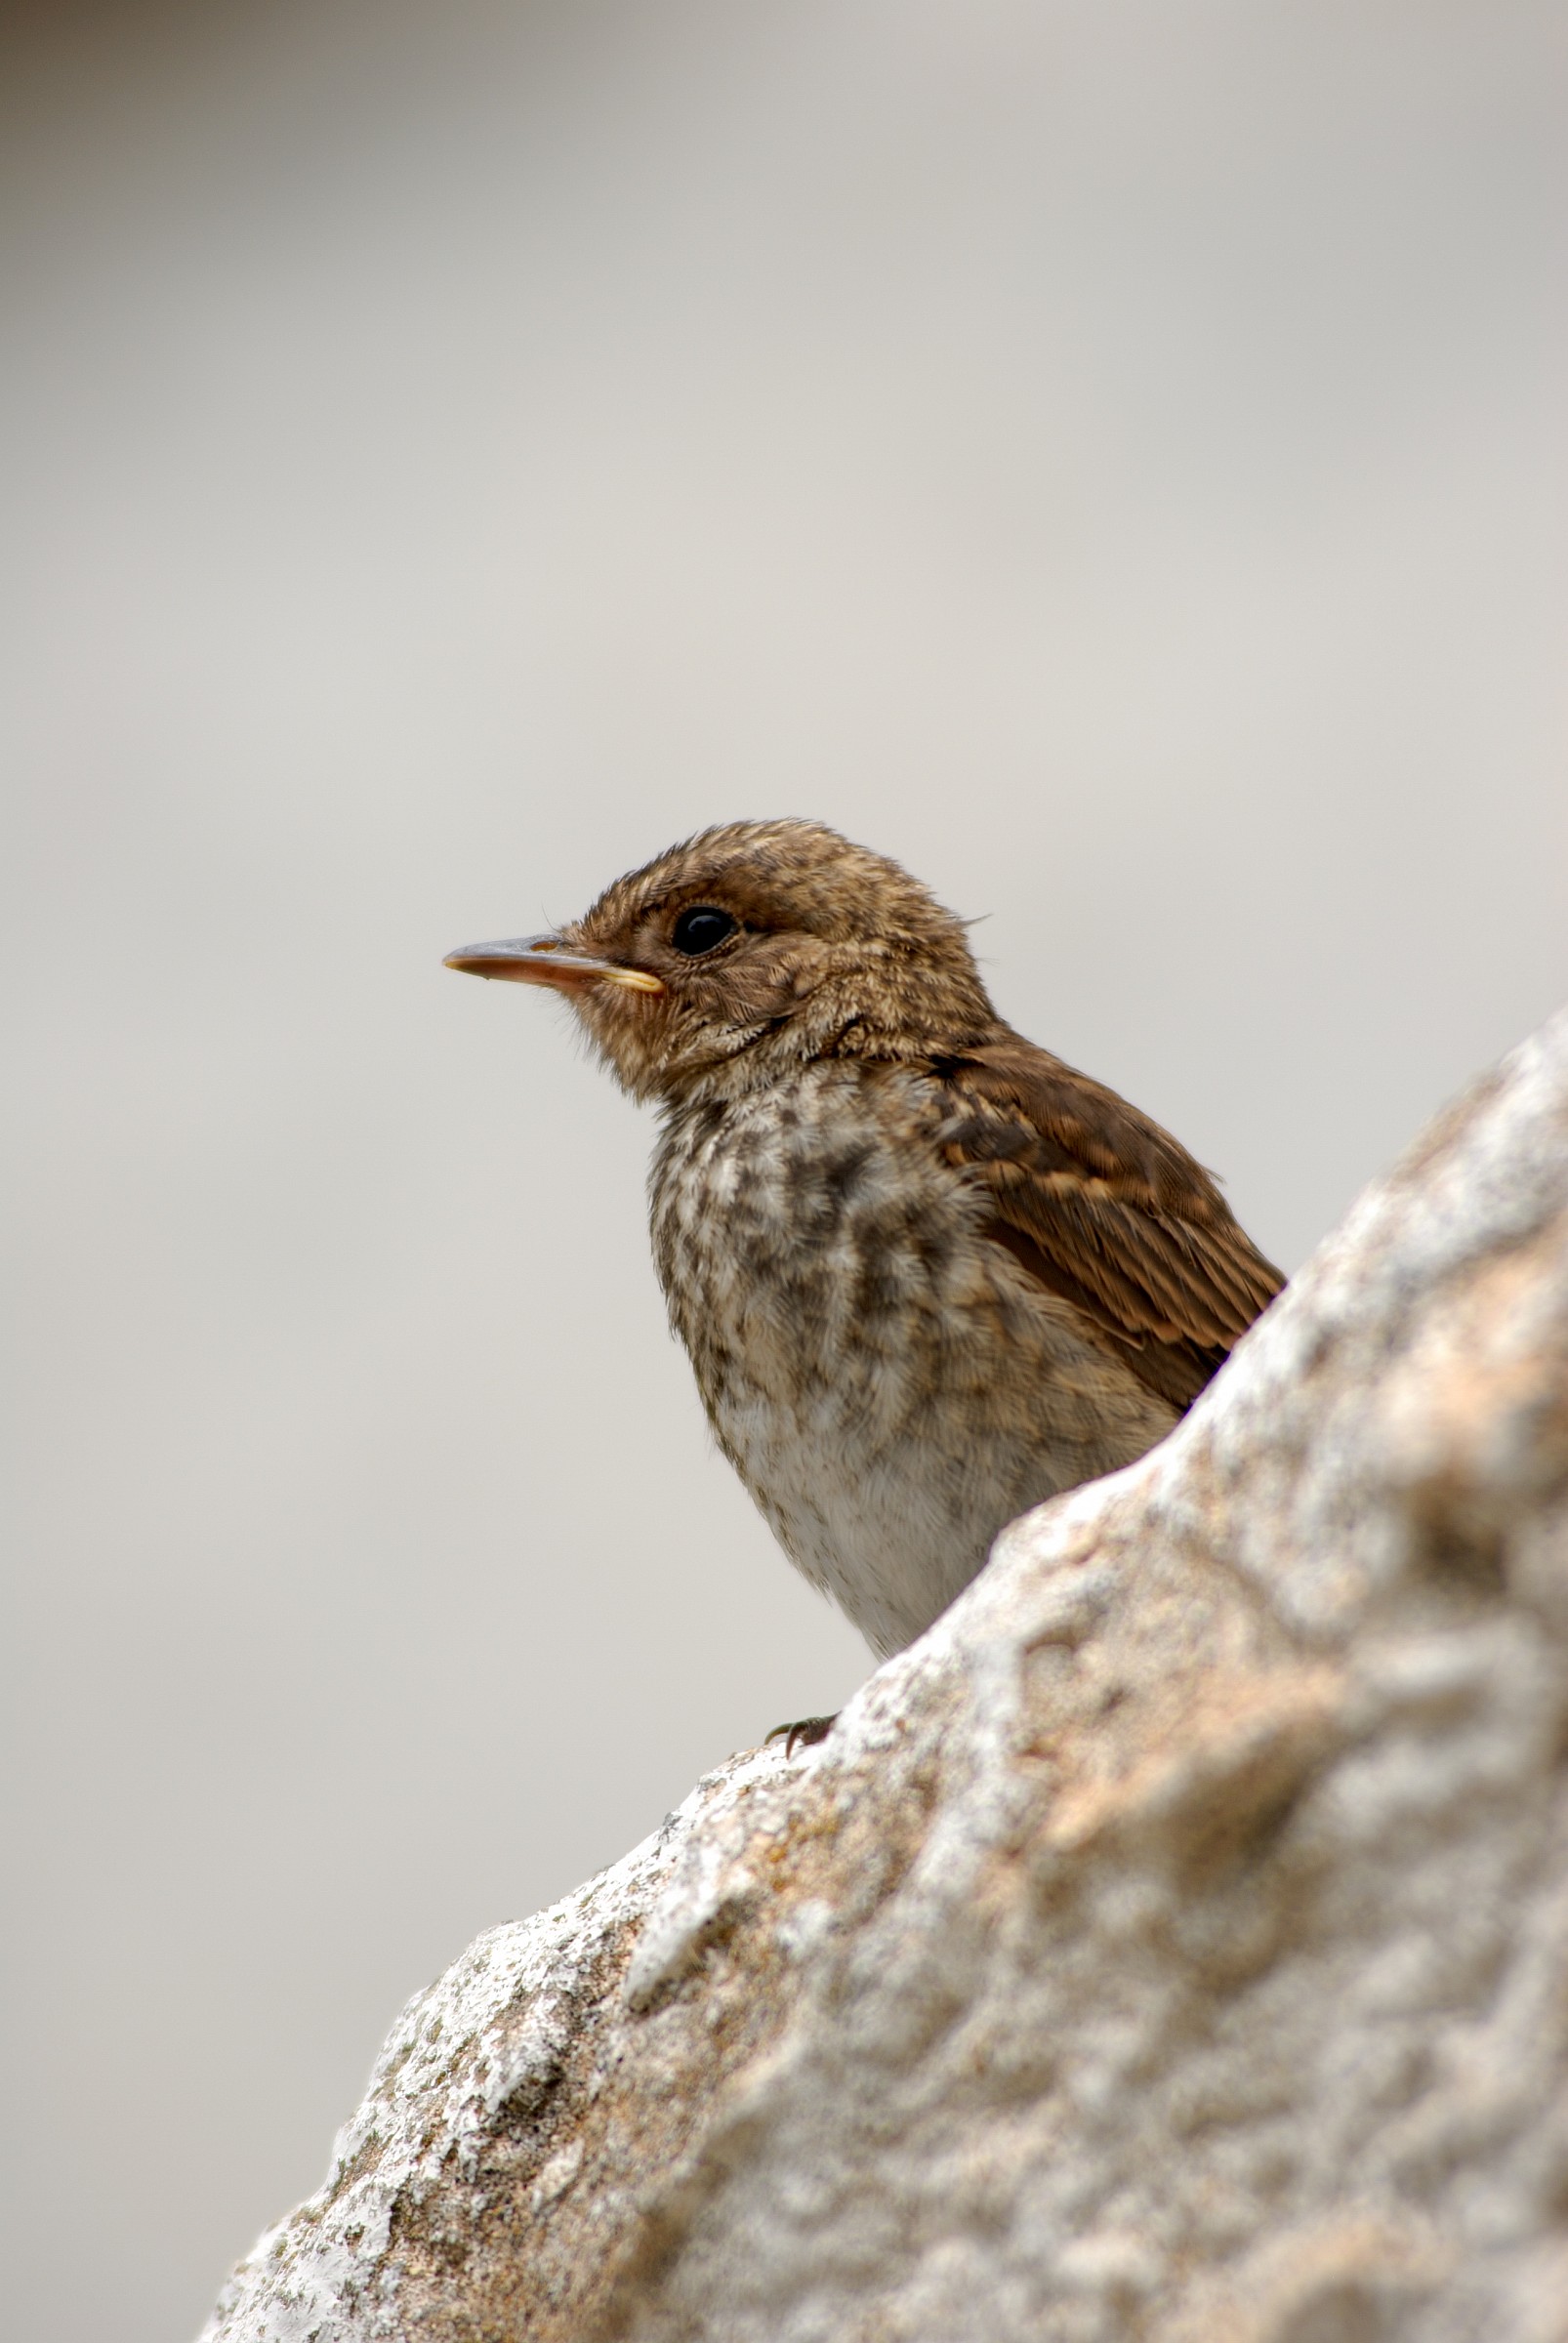 Sparrow posing...